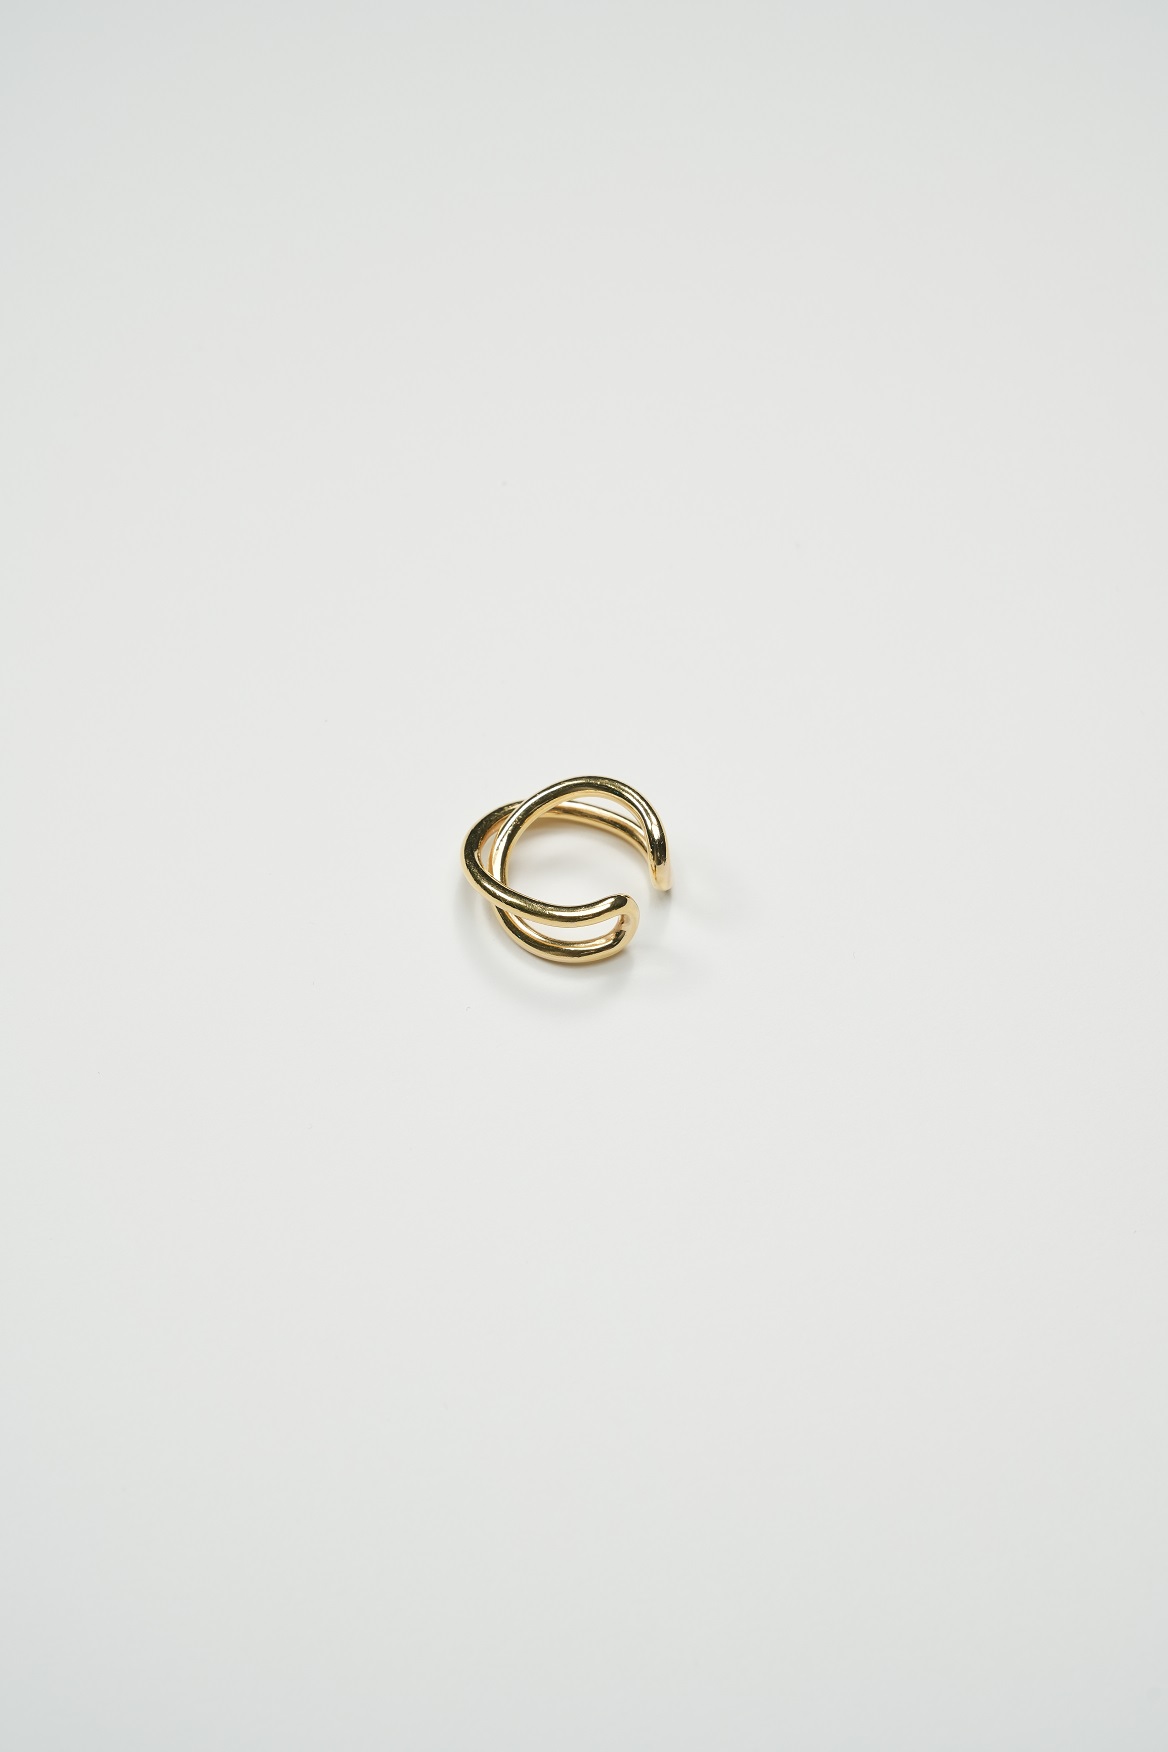 24K yellow gold vermeil ring/earcuff in 925 silver